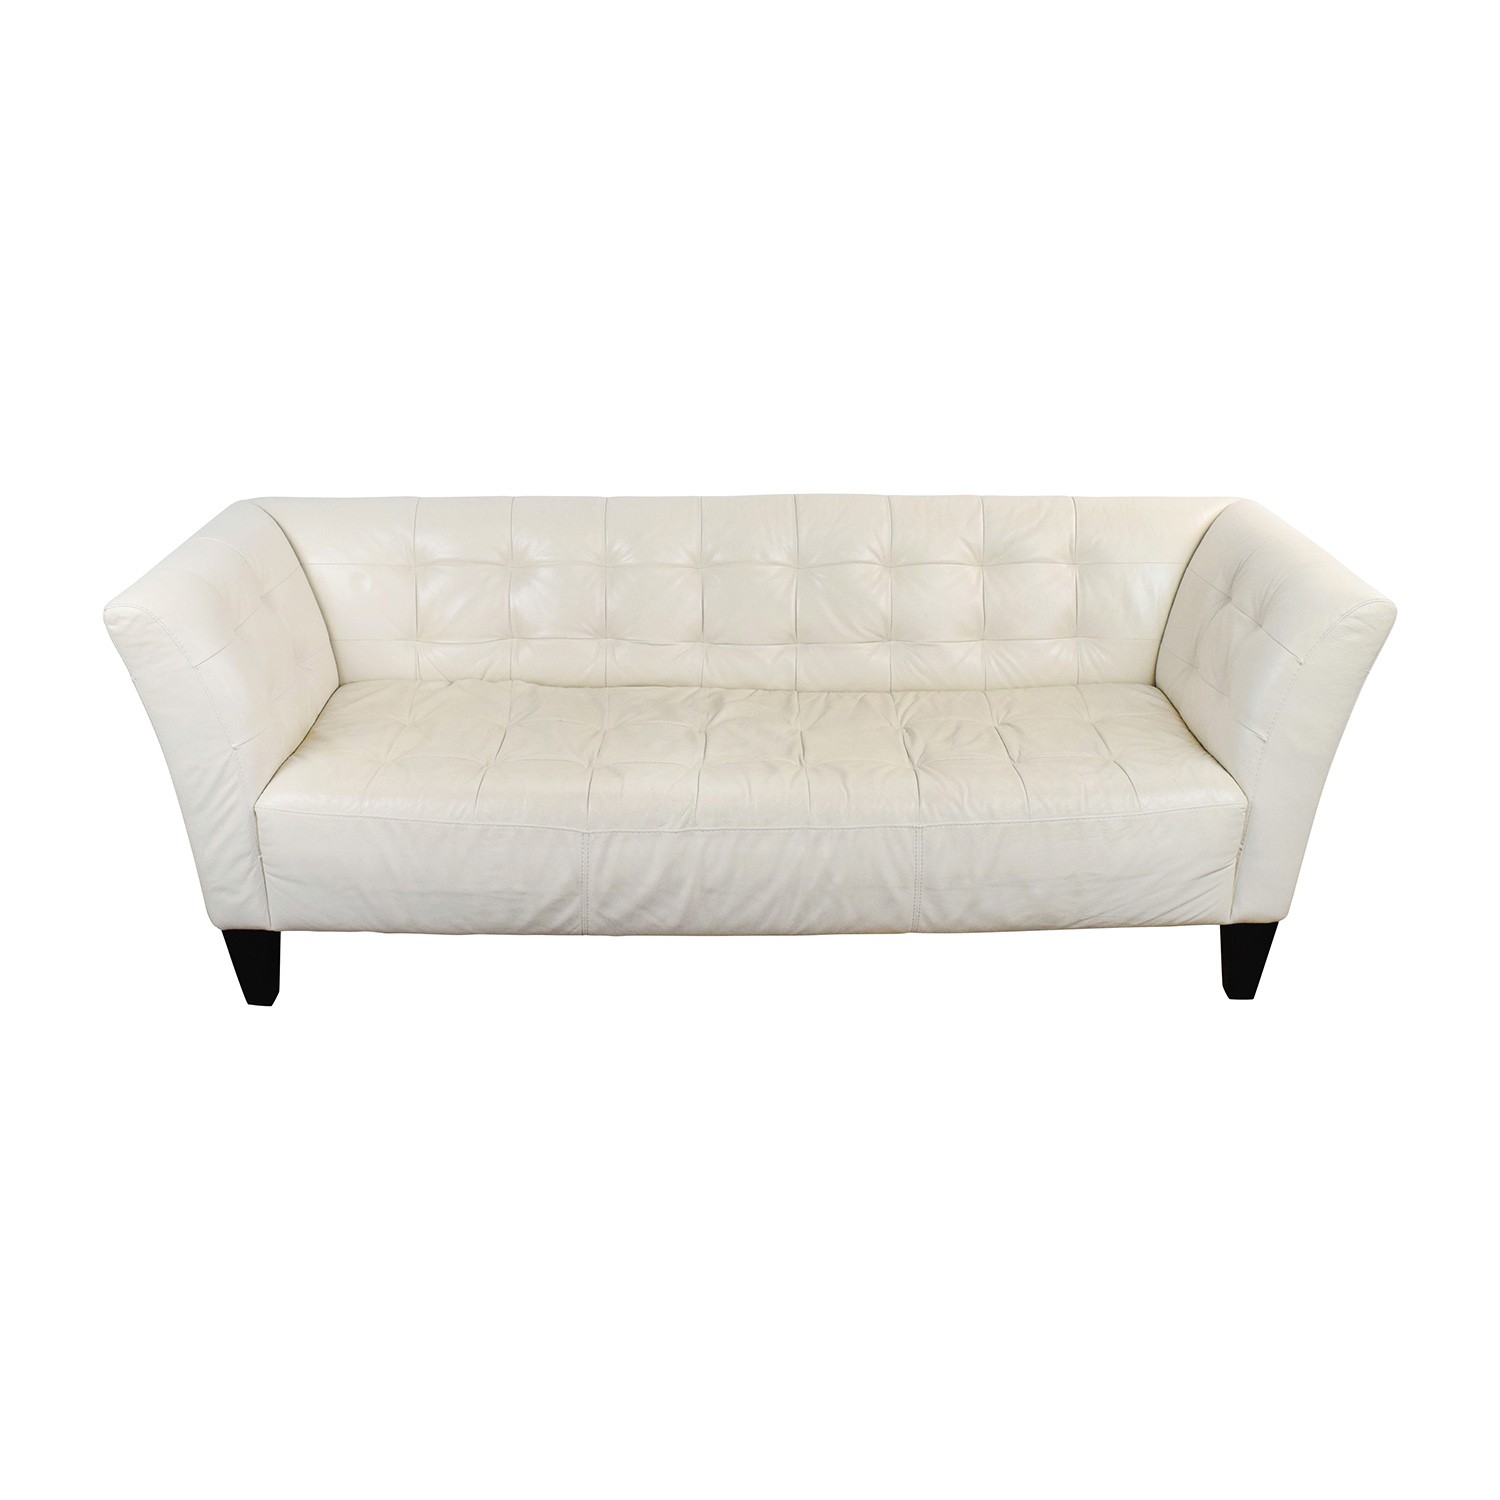 86 off macys macys modern white leather tufted sofa 3